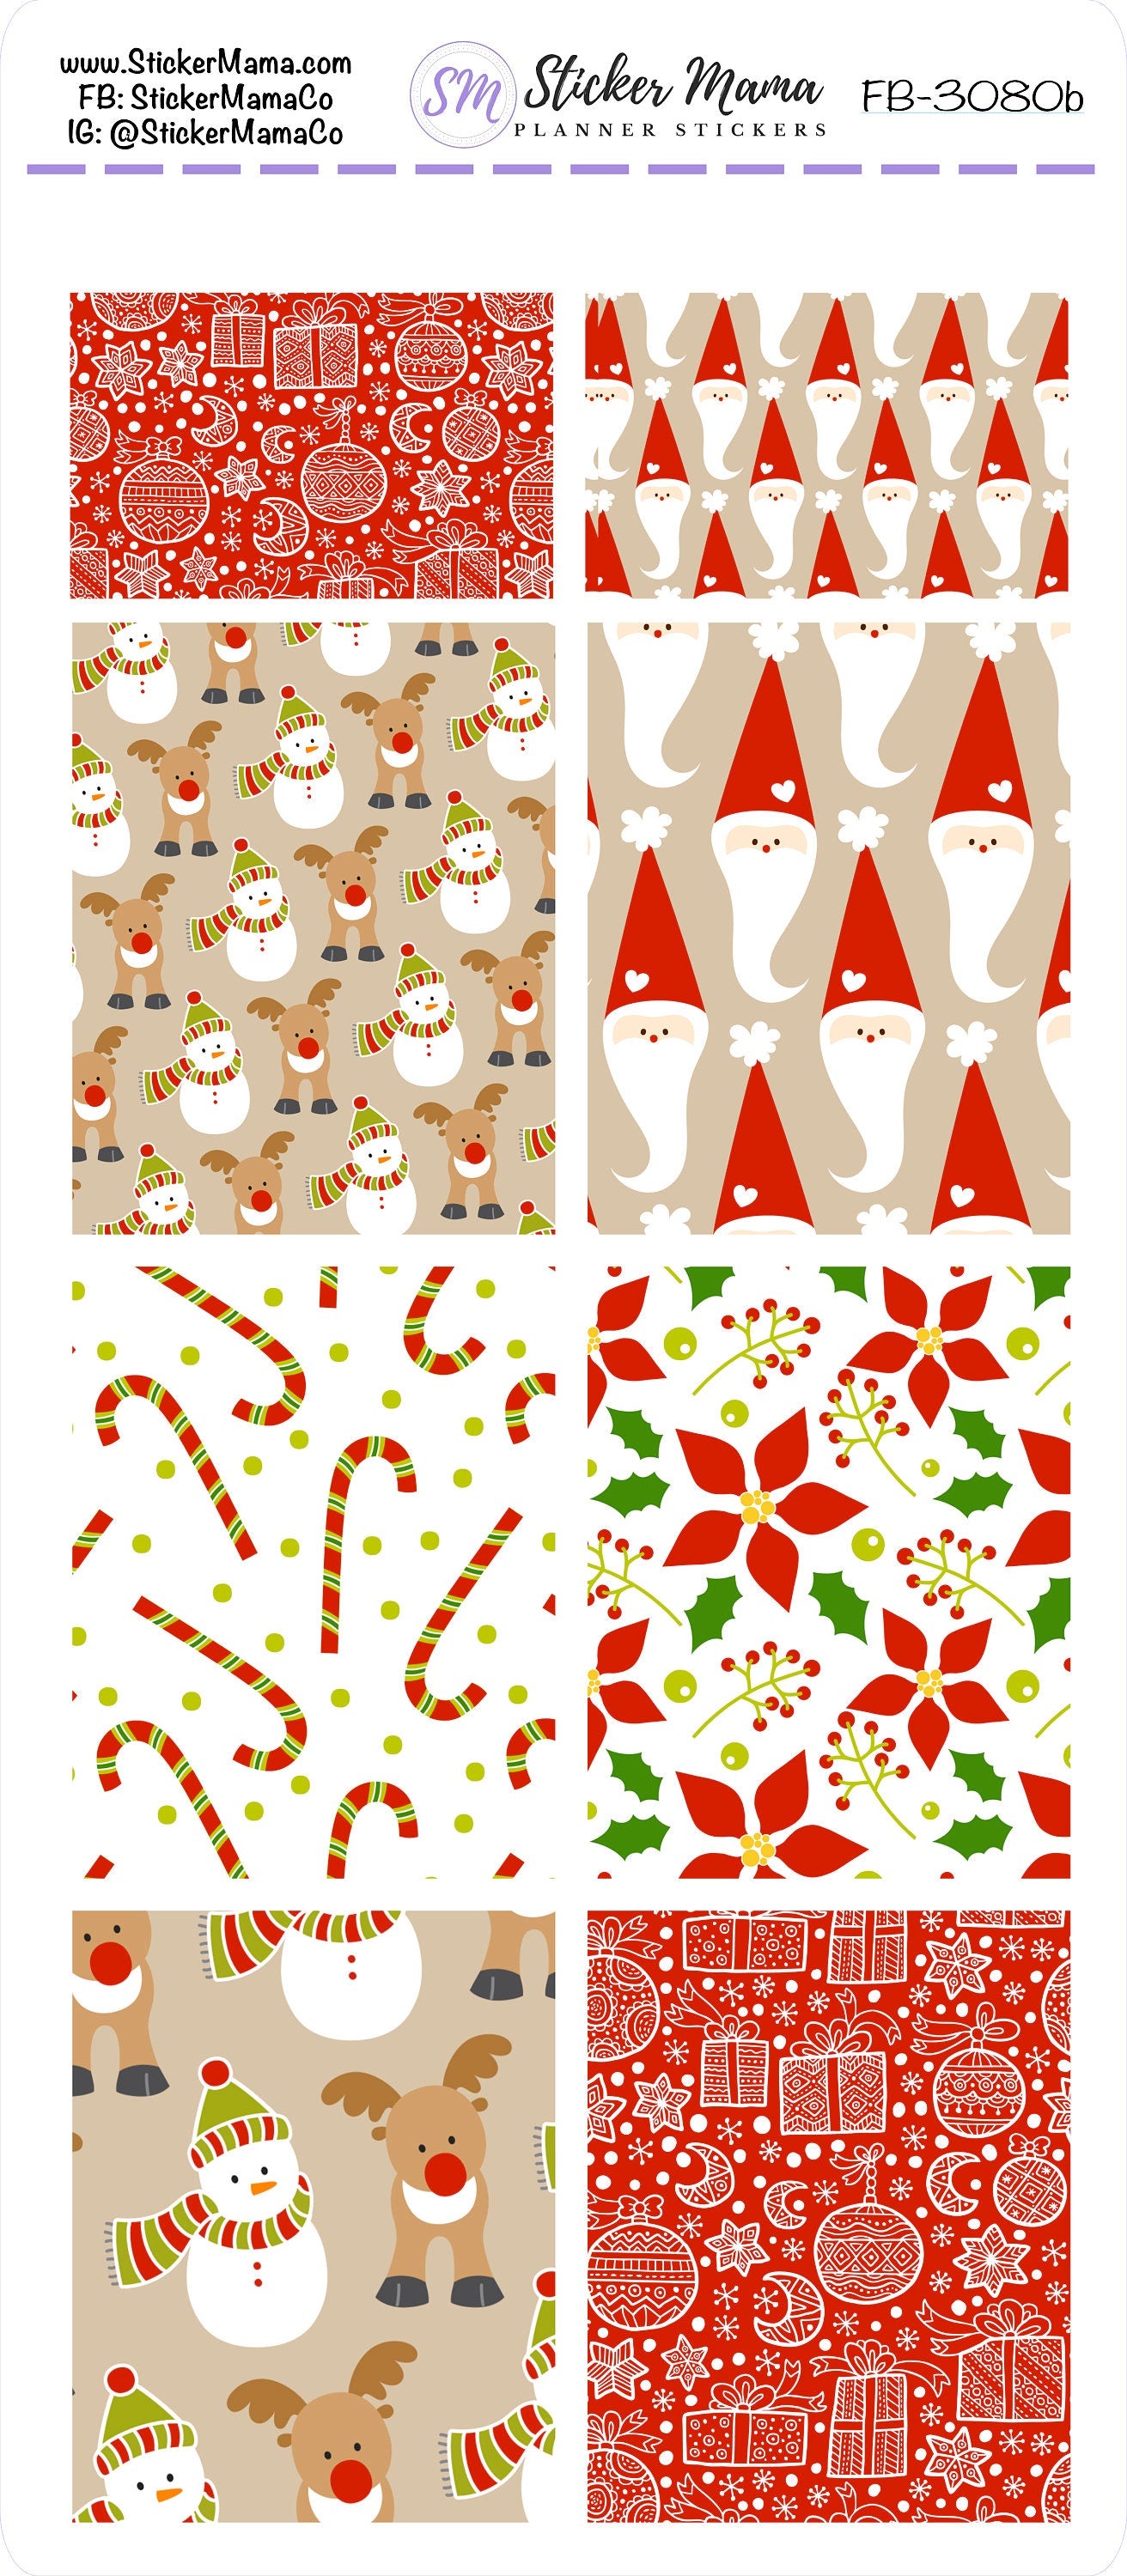 FB-3080 - FULL BOX Stickers - Traditional Christmas - Planner Stickers - Full Box for Planners